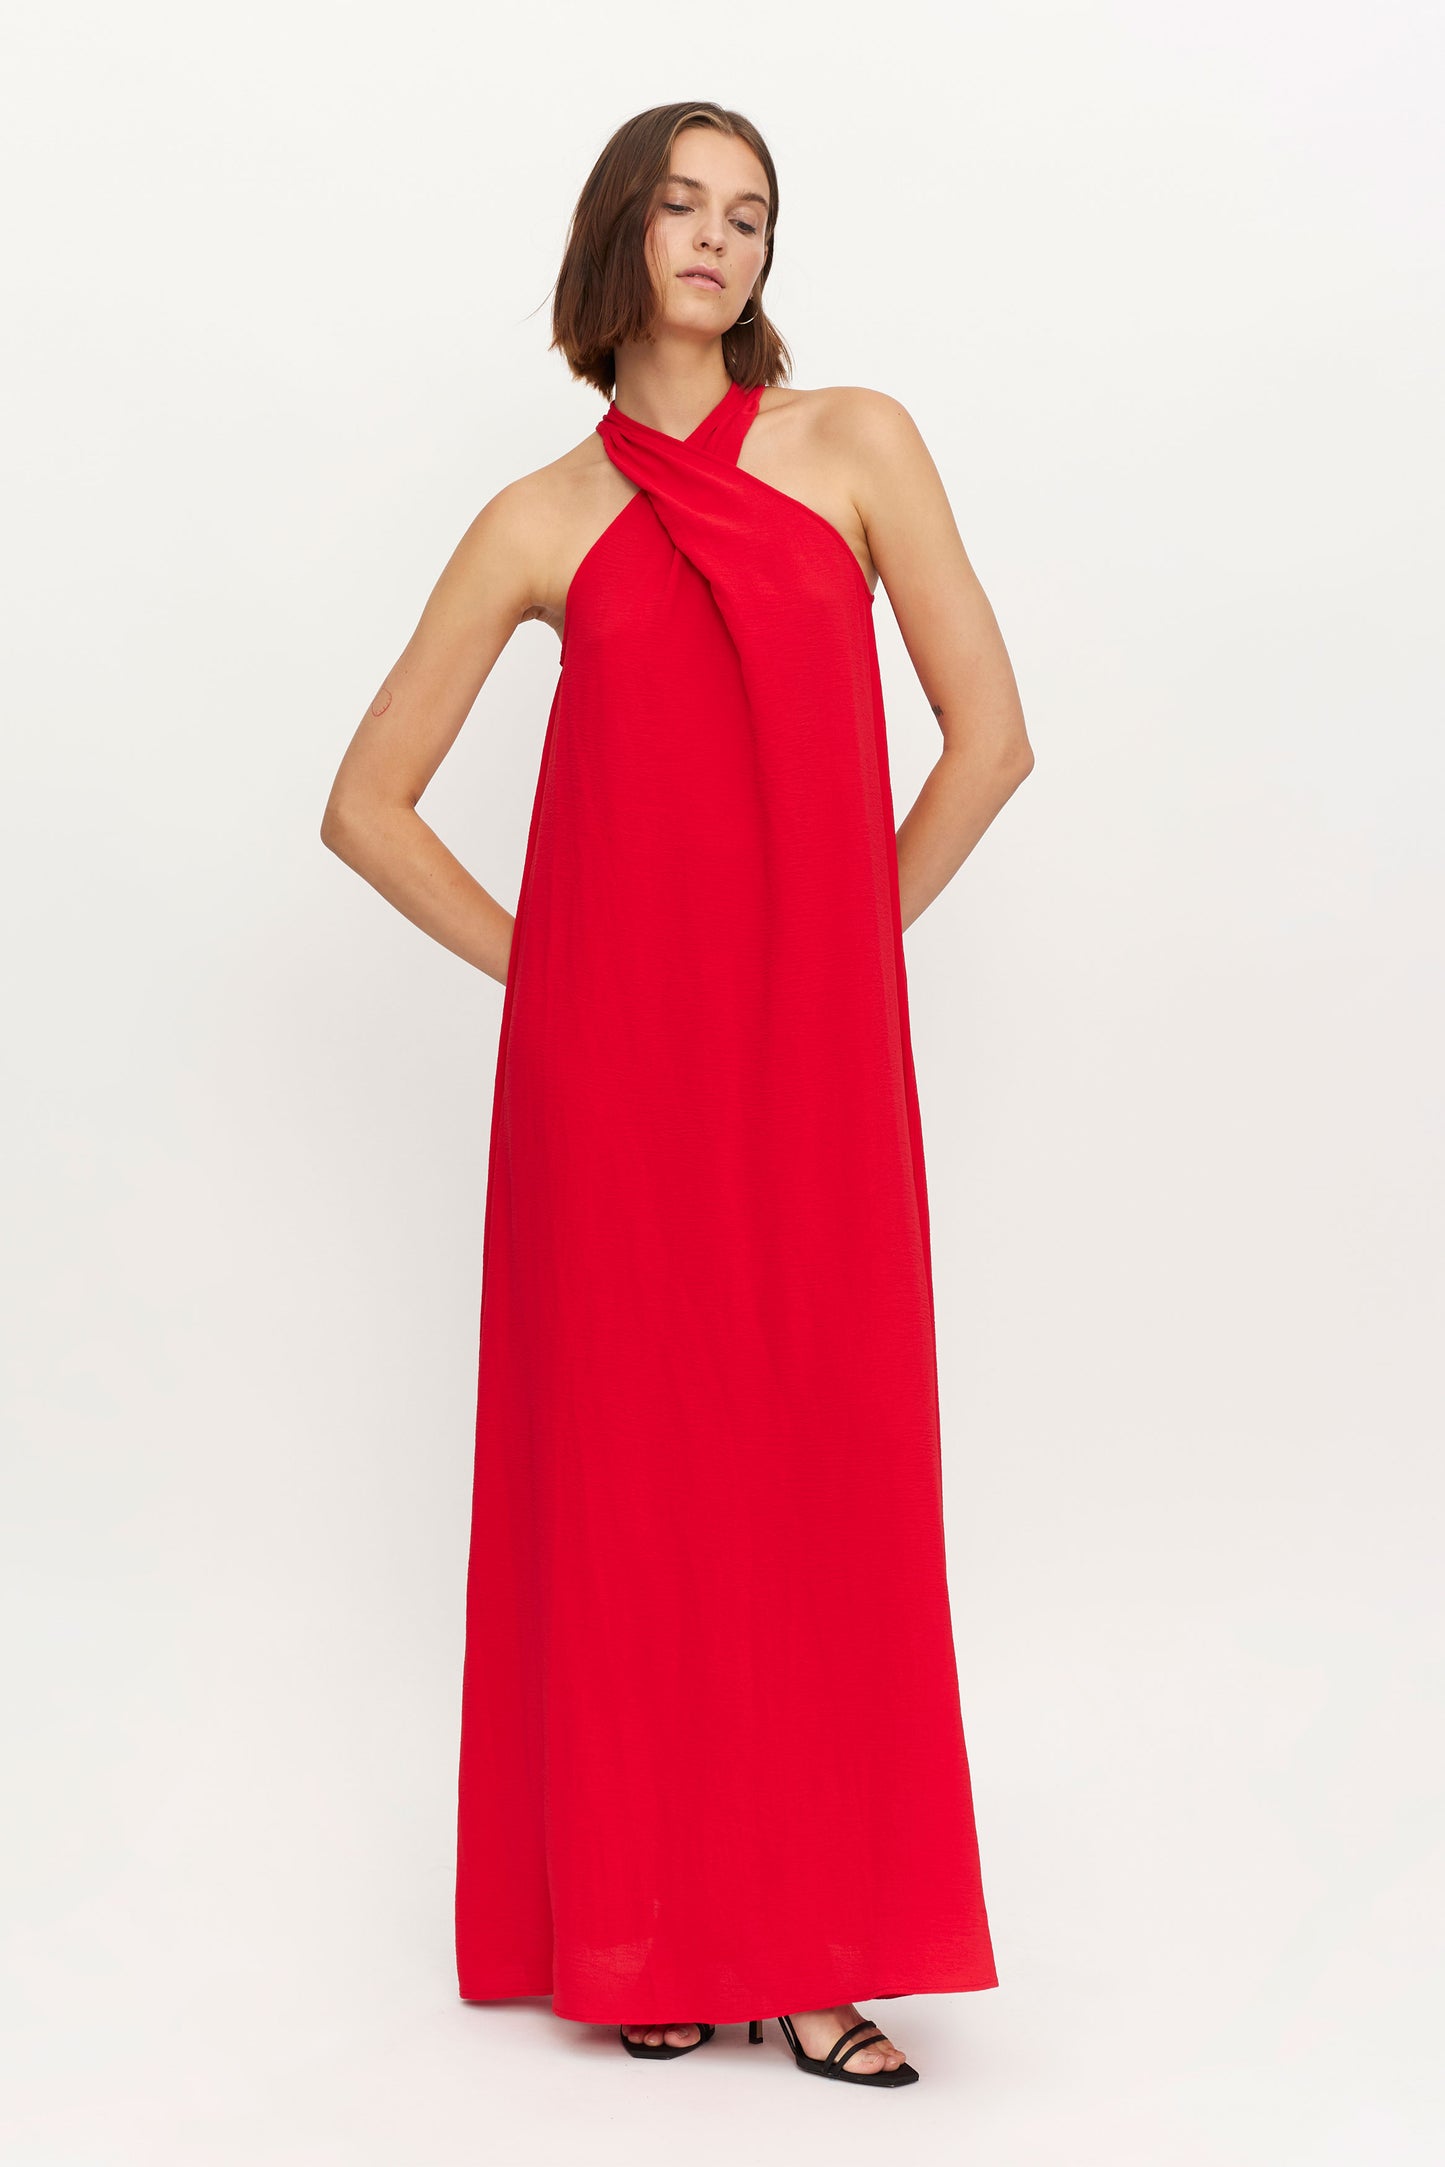 Long red halter neck dress